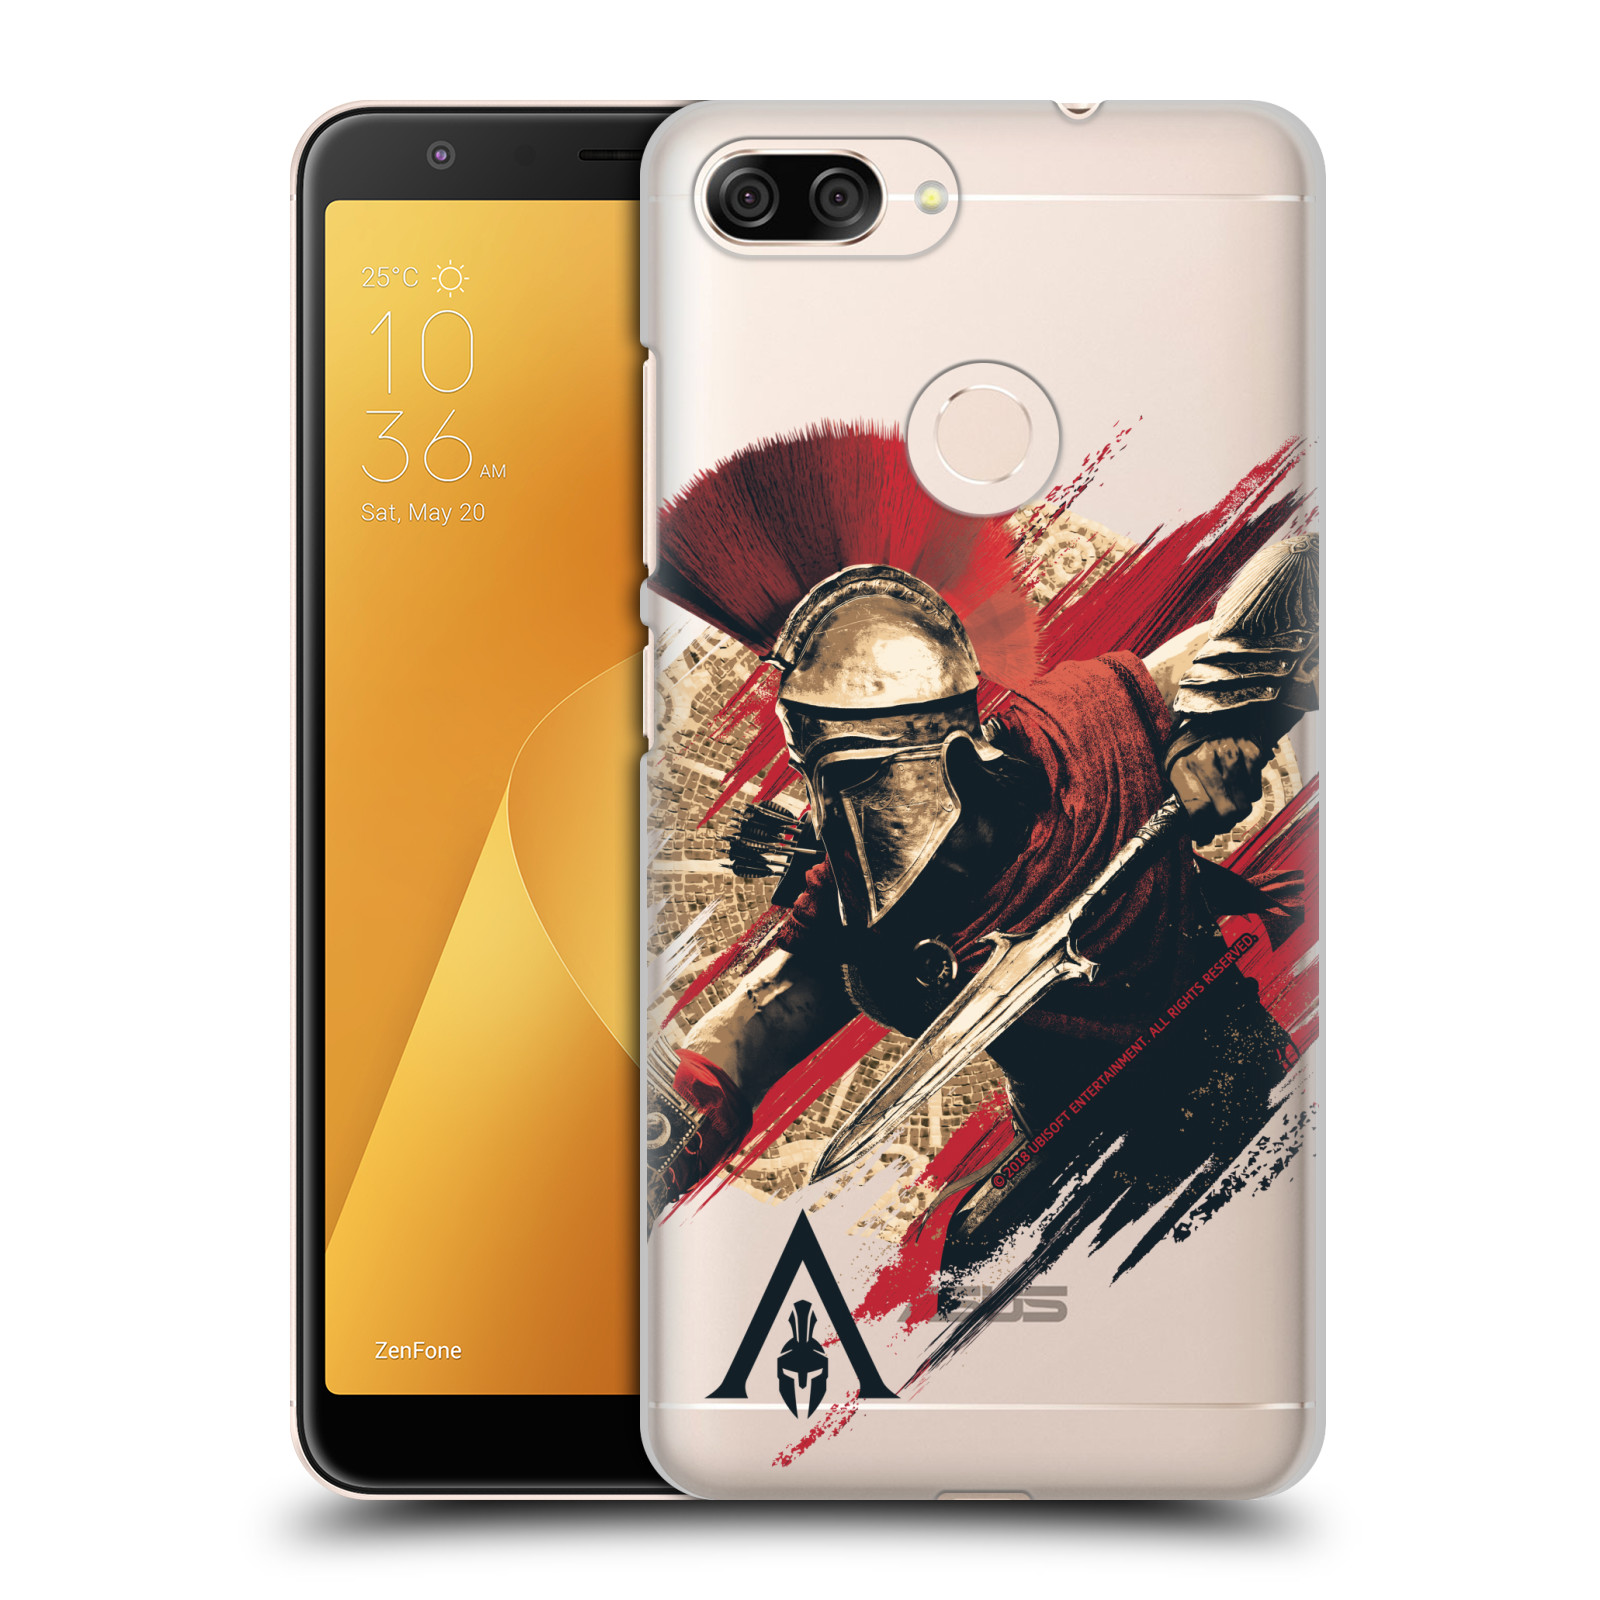 Pouzdro na mobil ASUS ZENFONE Max Plus M1 - HEAD CASE - Assassins Creed Odyssey Alexios s oštěpem